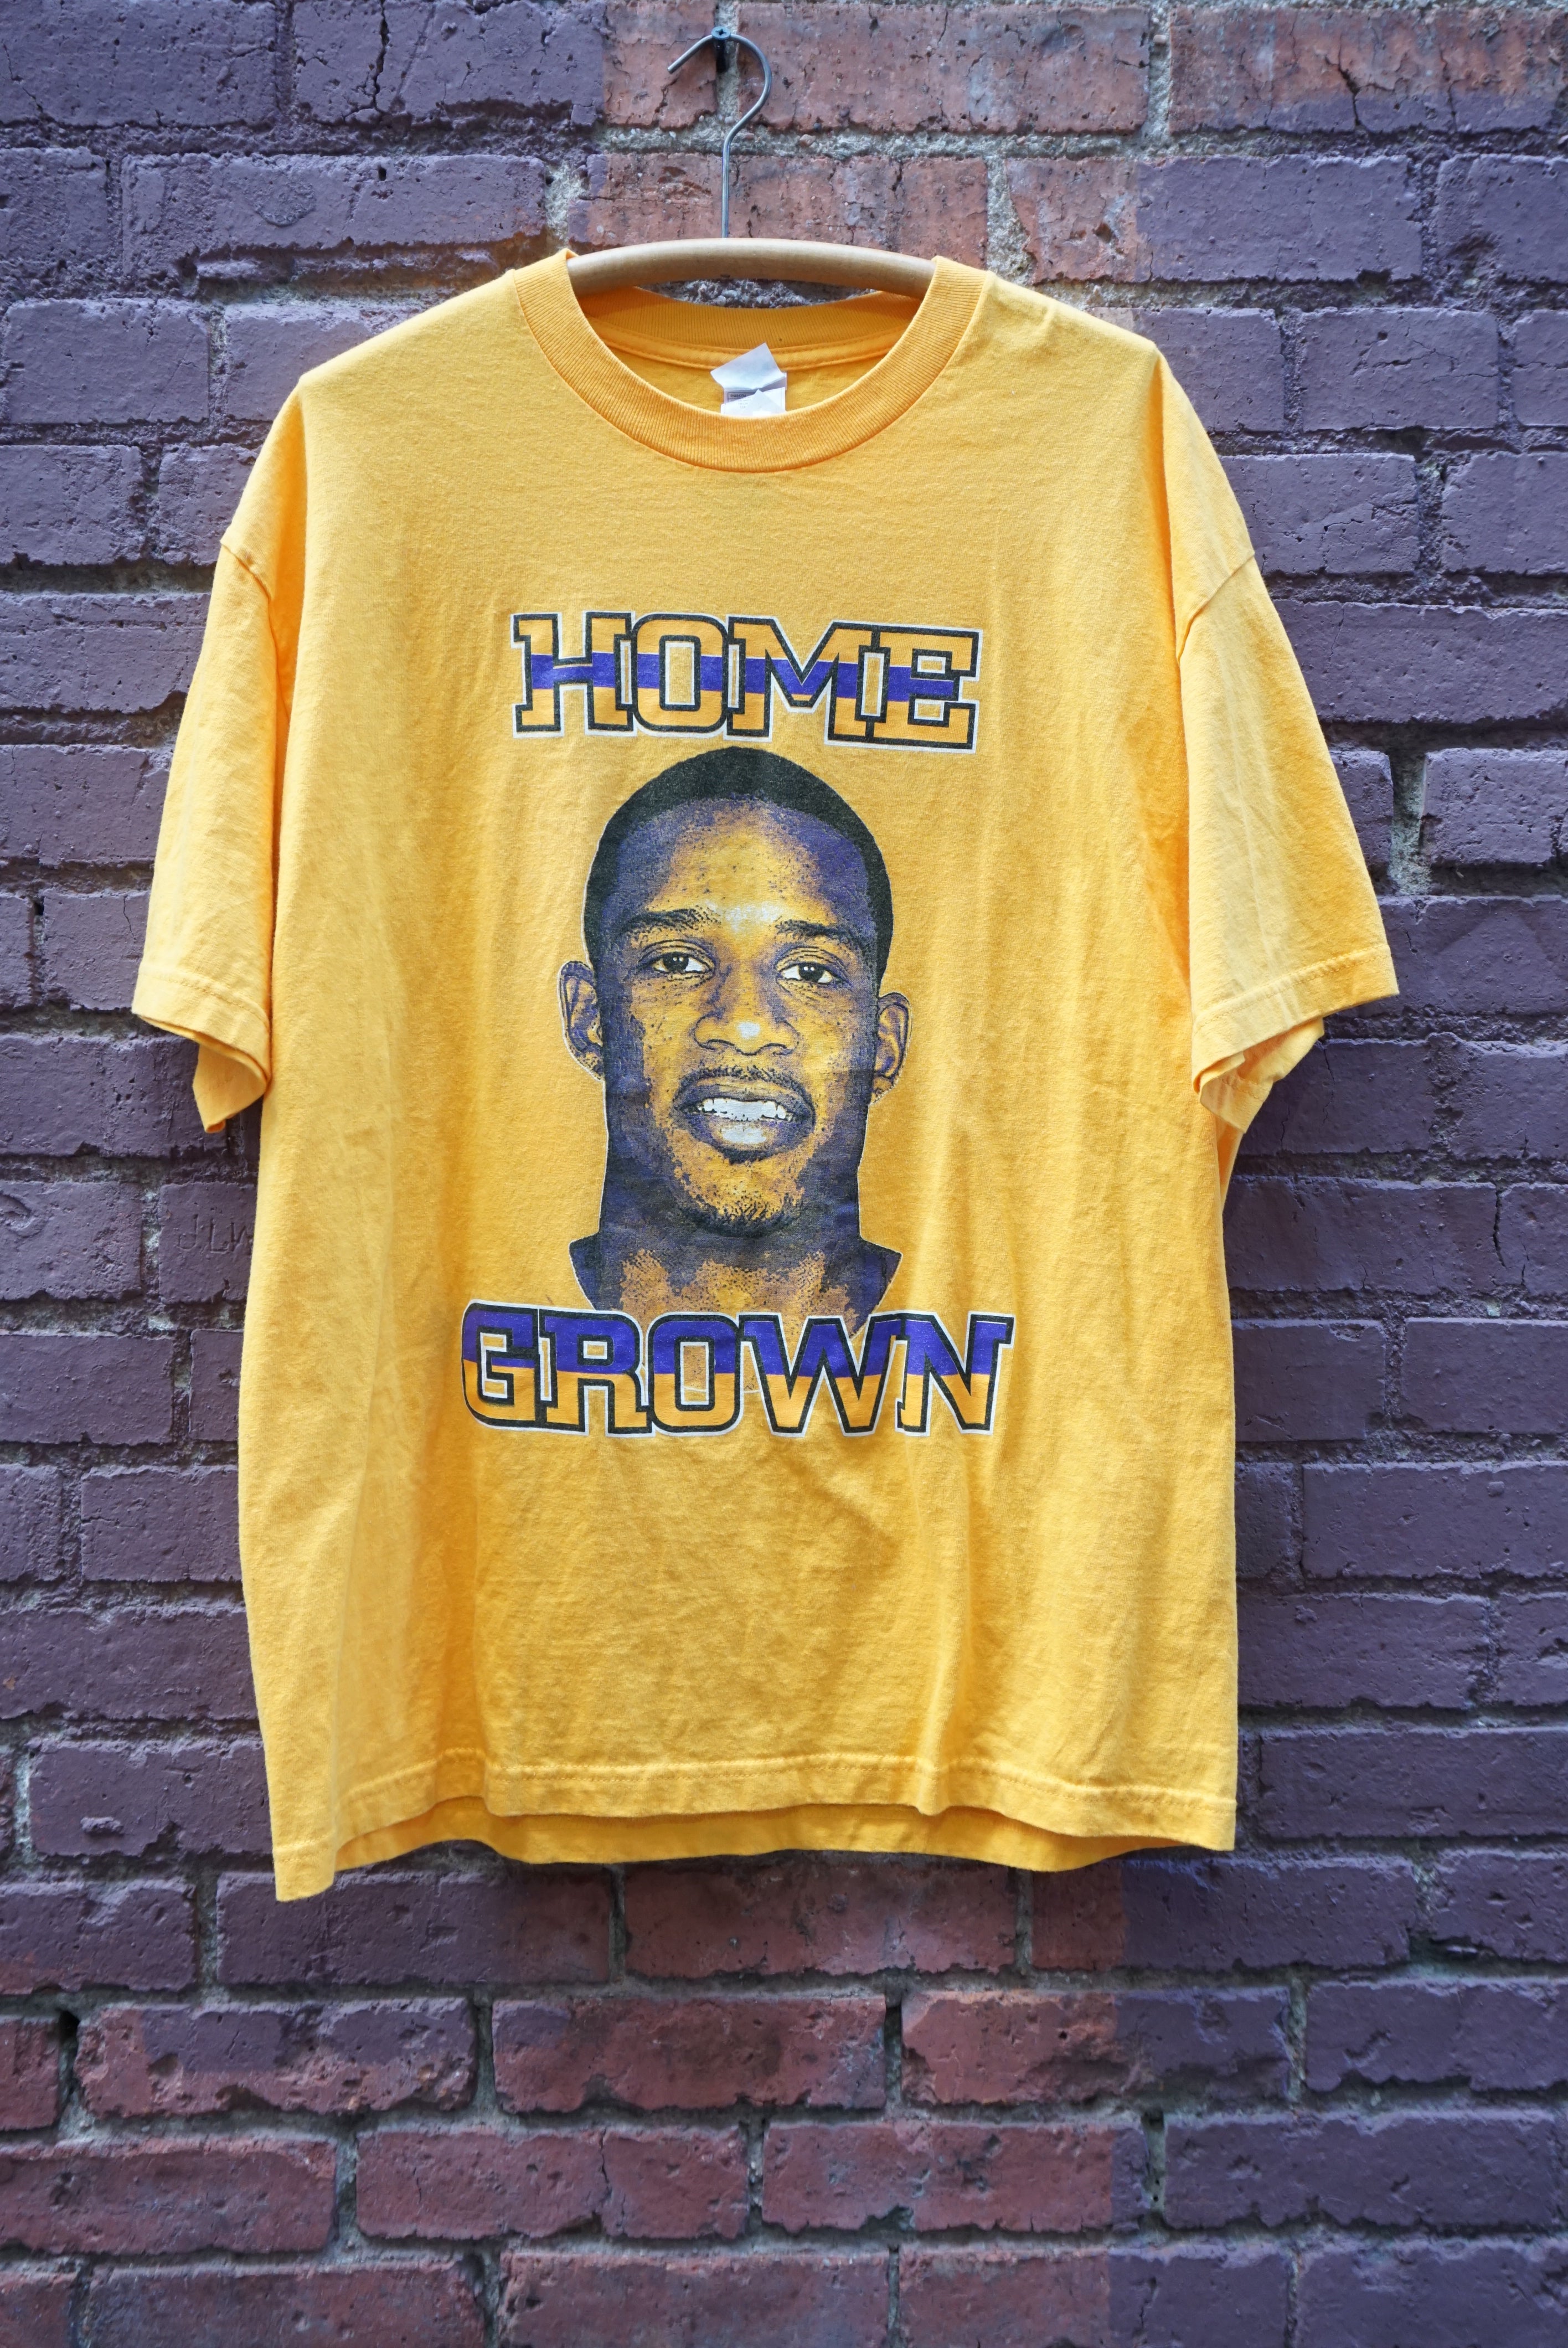 Y2k Kobe Bryant #8 Bootleg Football Jersey - Sz XL - LA Lakers NBA  streetwear